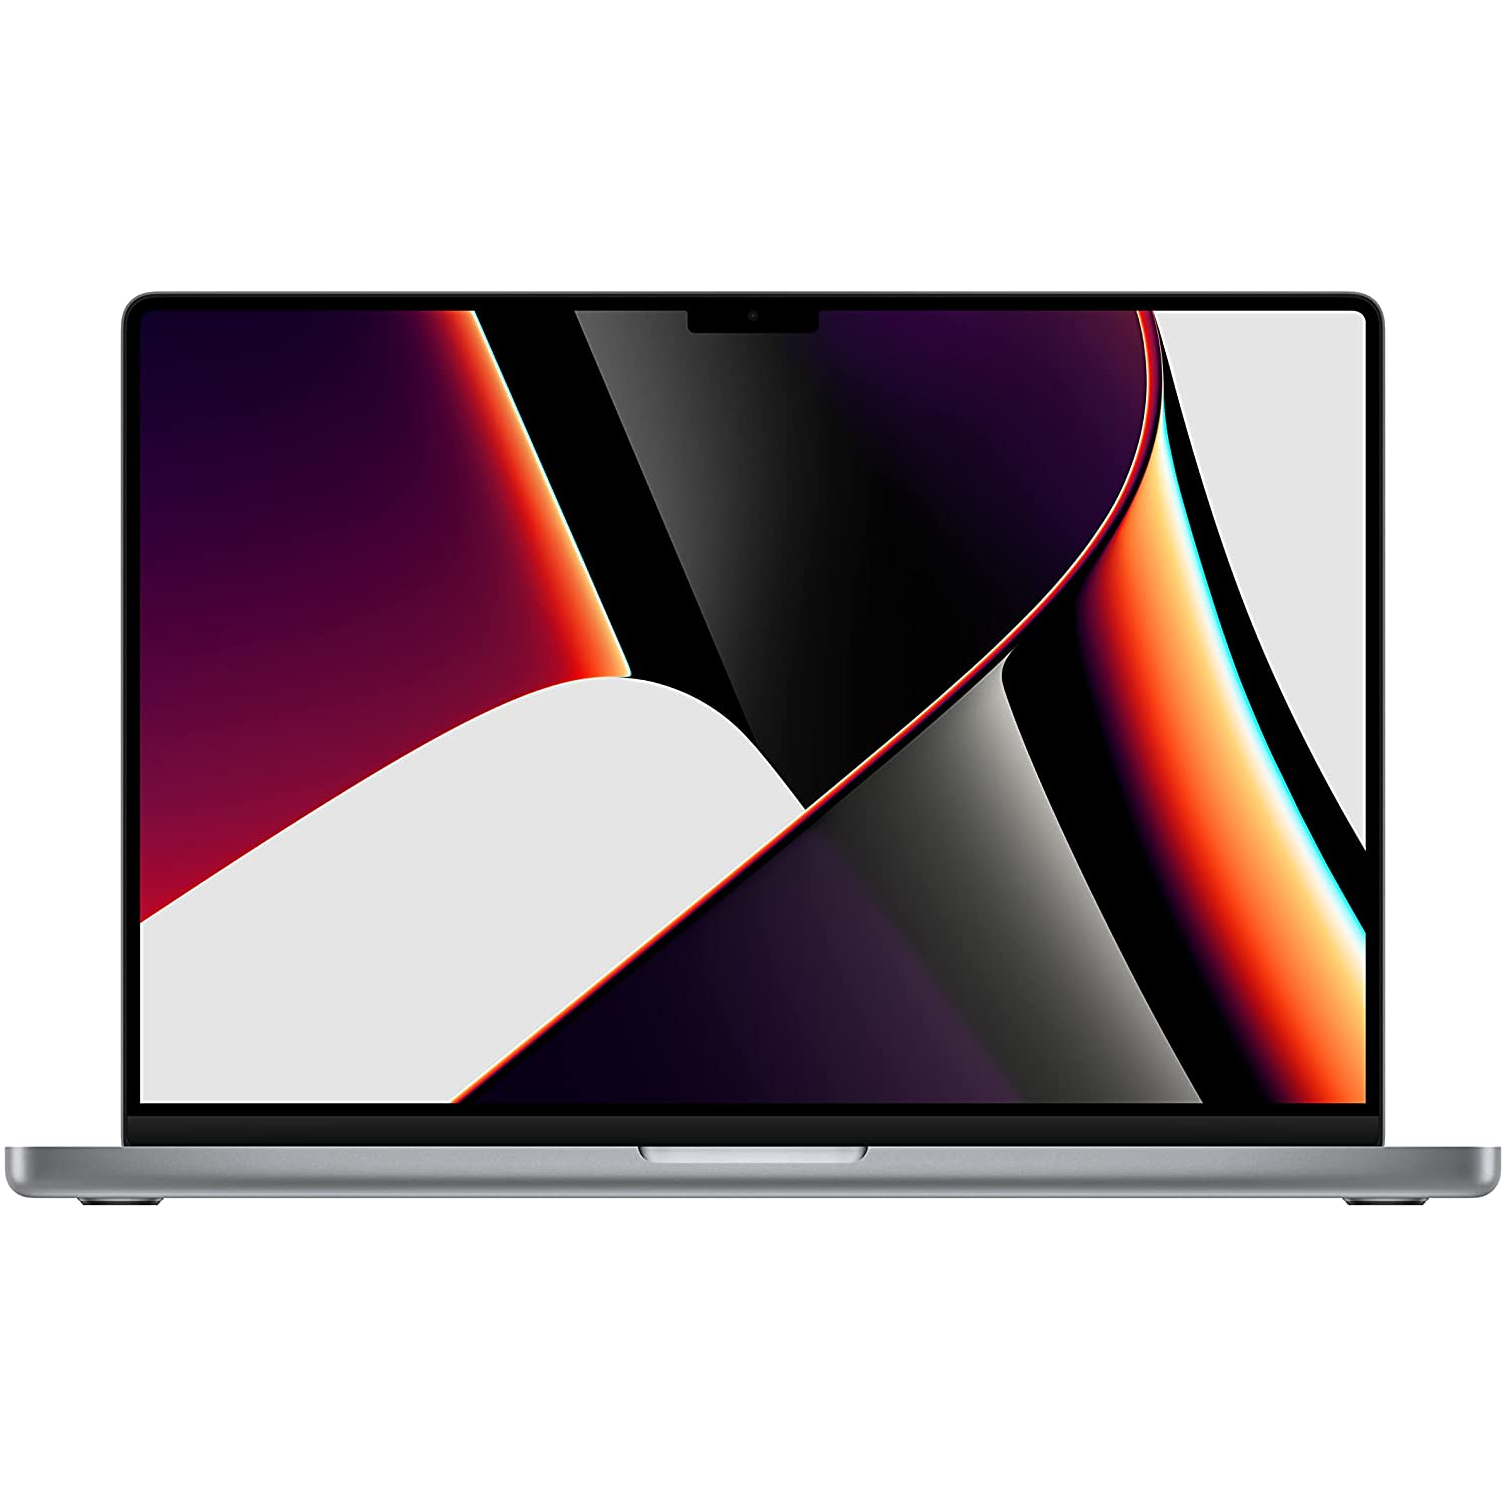 MacBook Black Friday deal